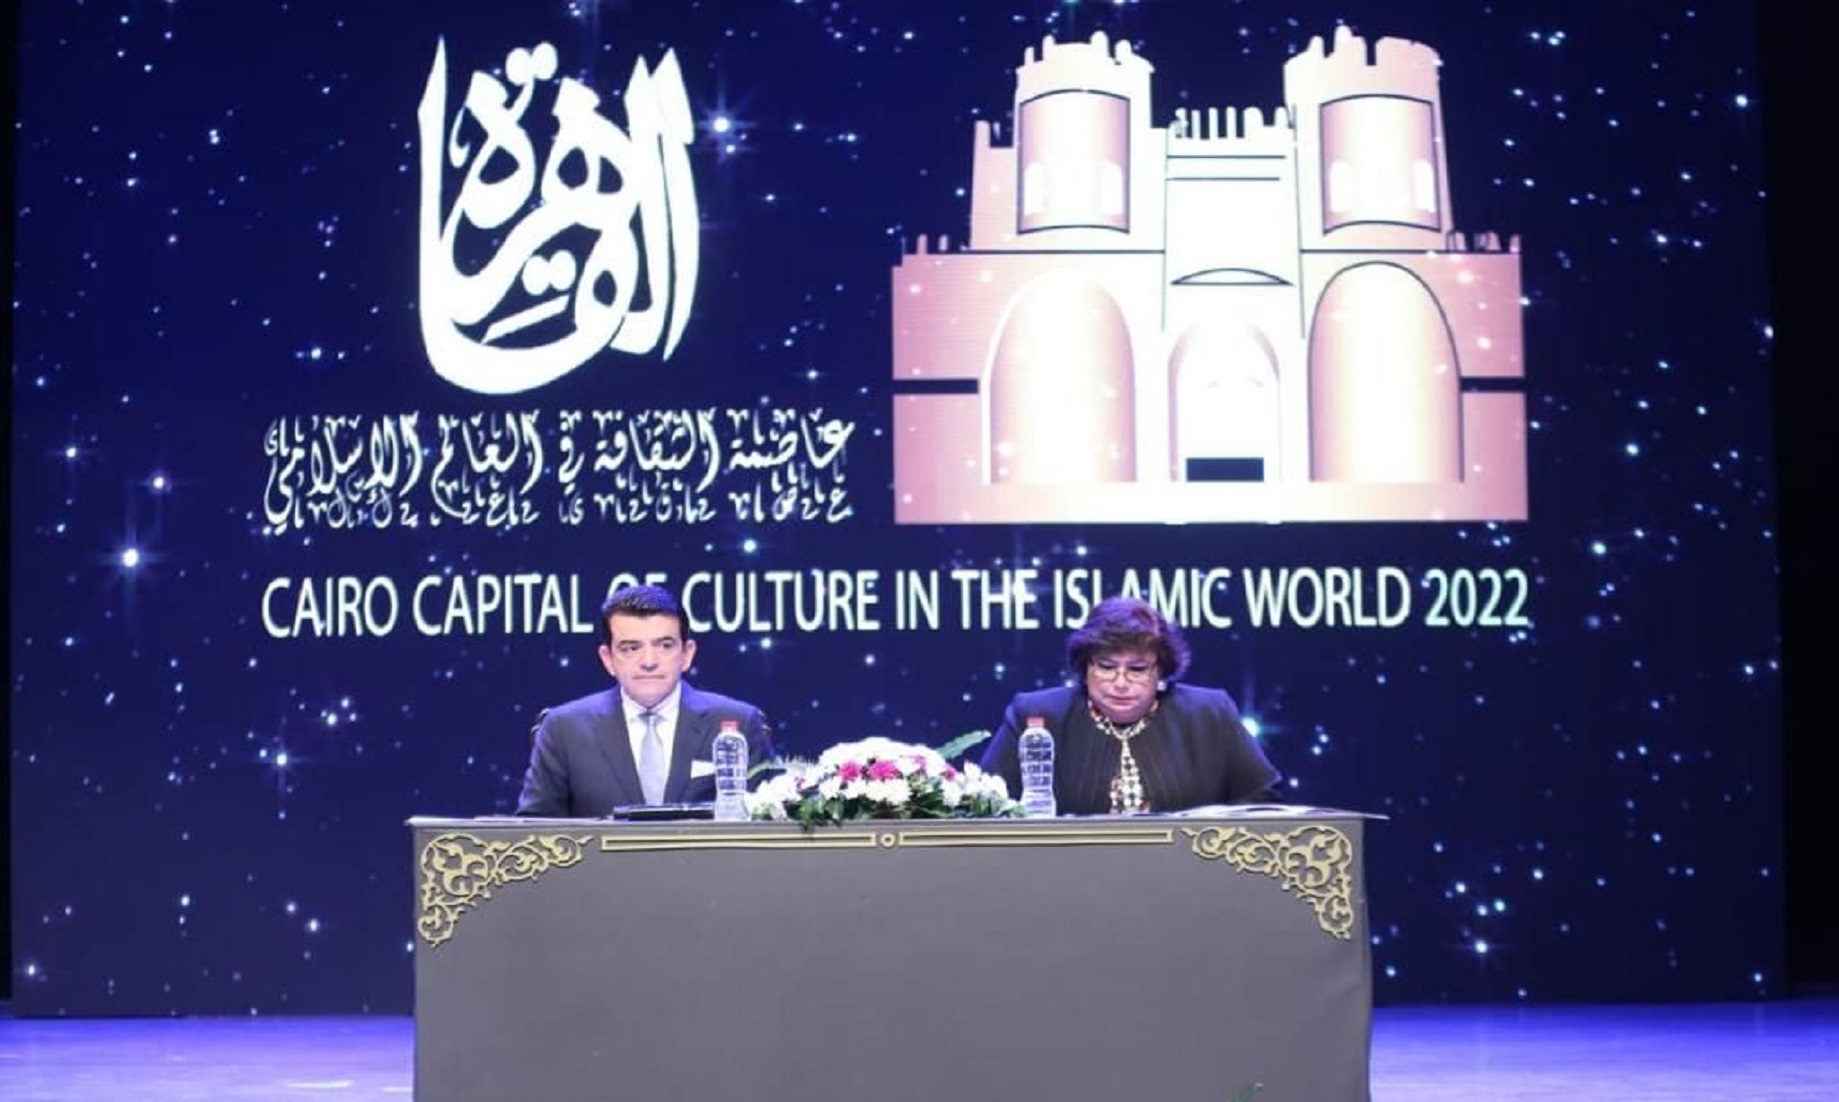 Celebrations Start For Cairo’s Designation As Islamic World’s Culture Capital